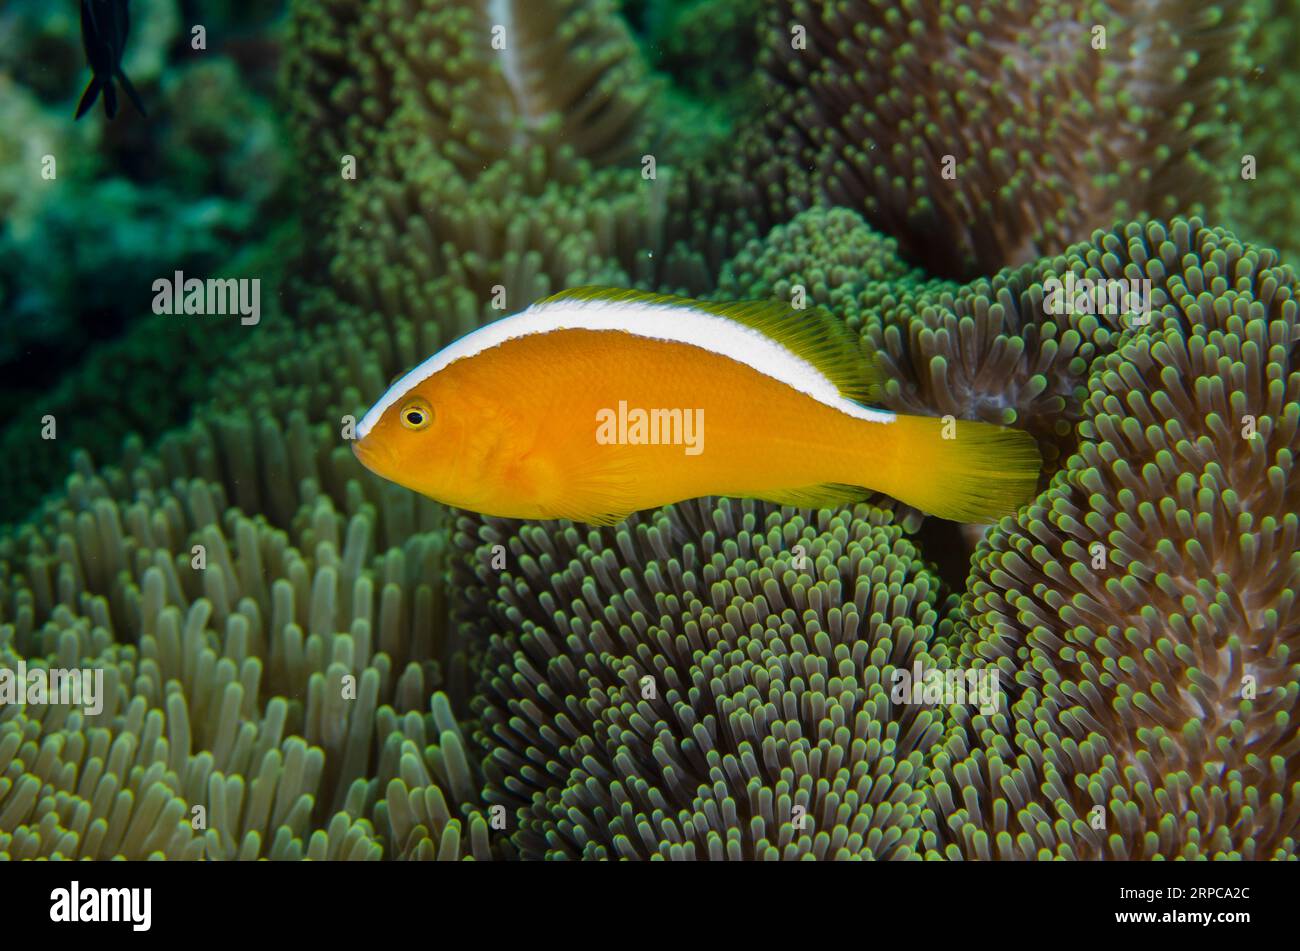 Orange Anemonefish, Amphiprion sandaracinos, in Magnificent Sea Anemone, Heteractis magnifica, Loleo dive site, Weda, Halmahera, North Maluku, Indones Stock Photo